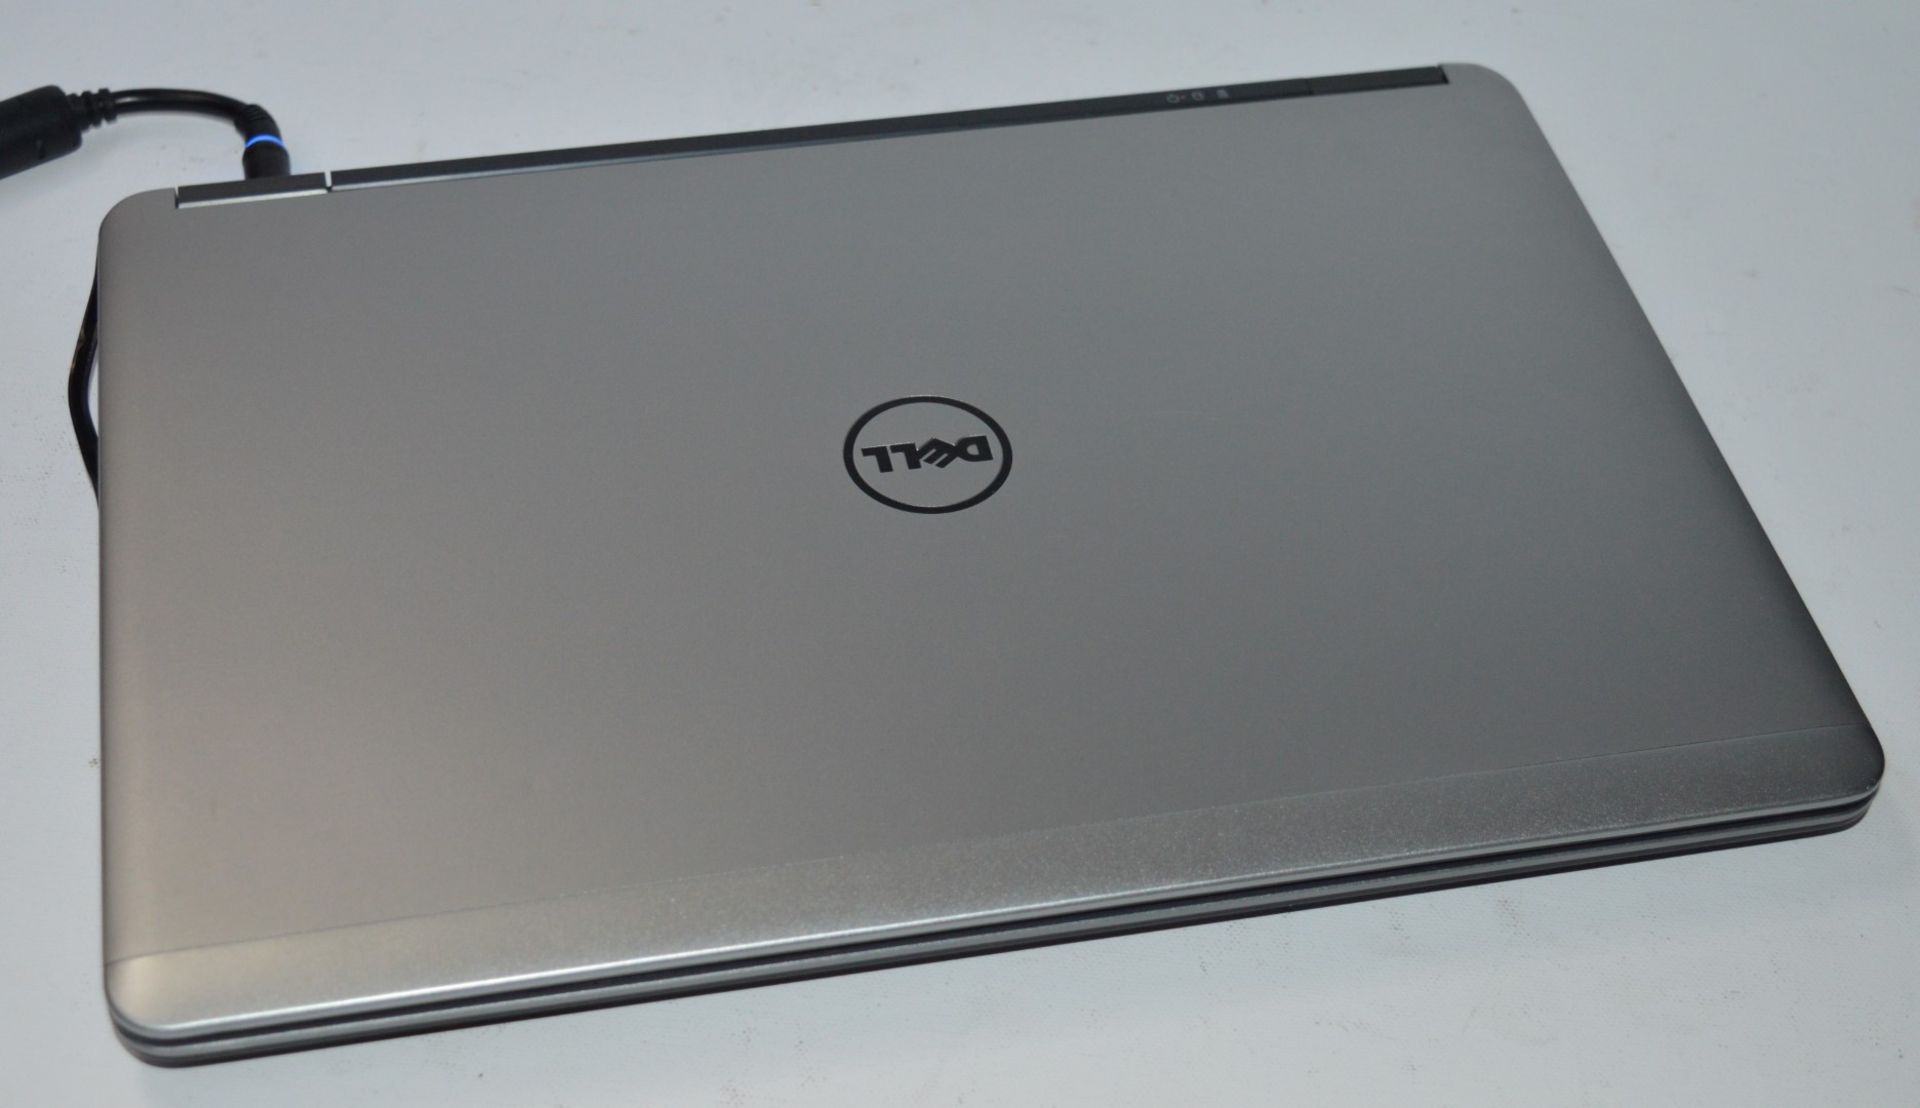 1 x Dell Latitude E7440 Laptop Computer - 14 Inch Screen - Features Intel Core i5-4310U 2.6ghz - Image 5 of 9